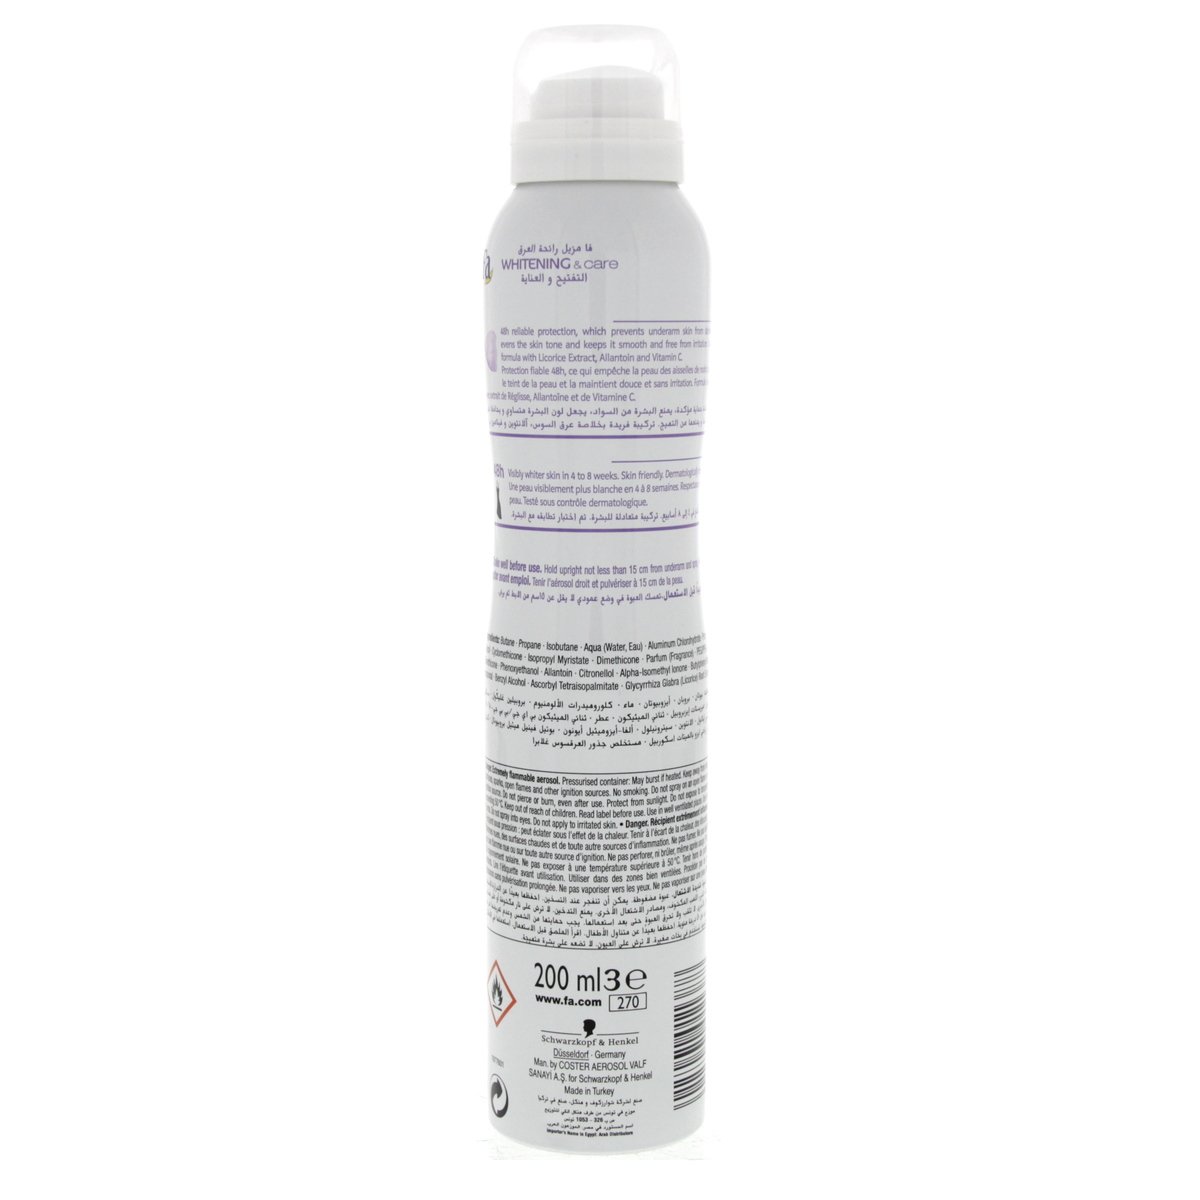 Fa Whitening & Care Deodorant Spray 200 ml